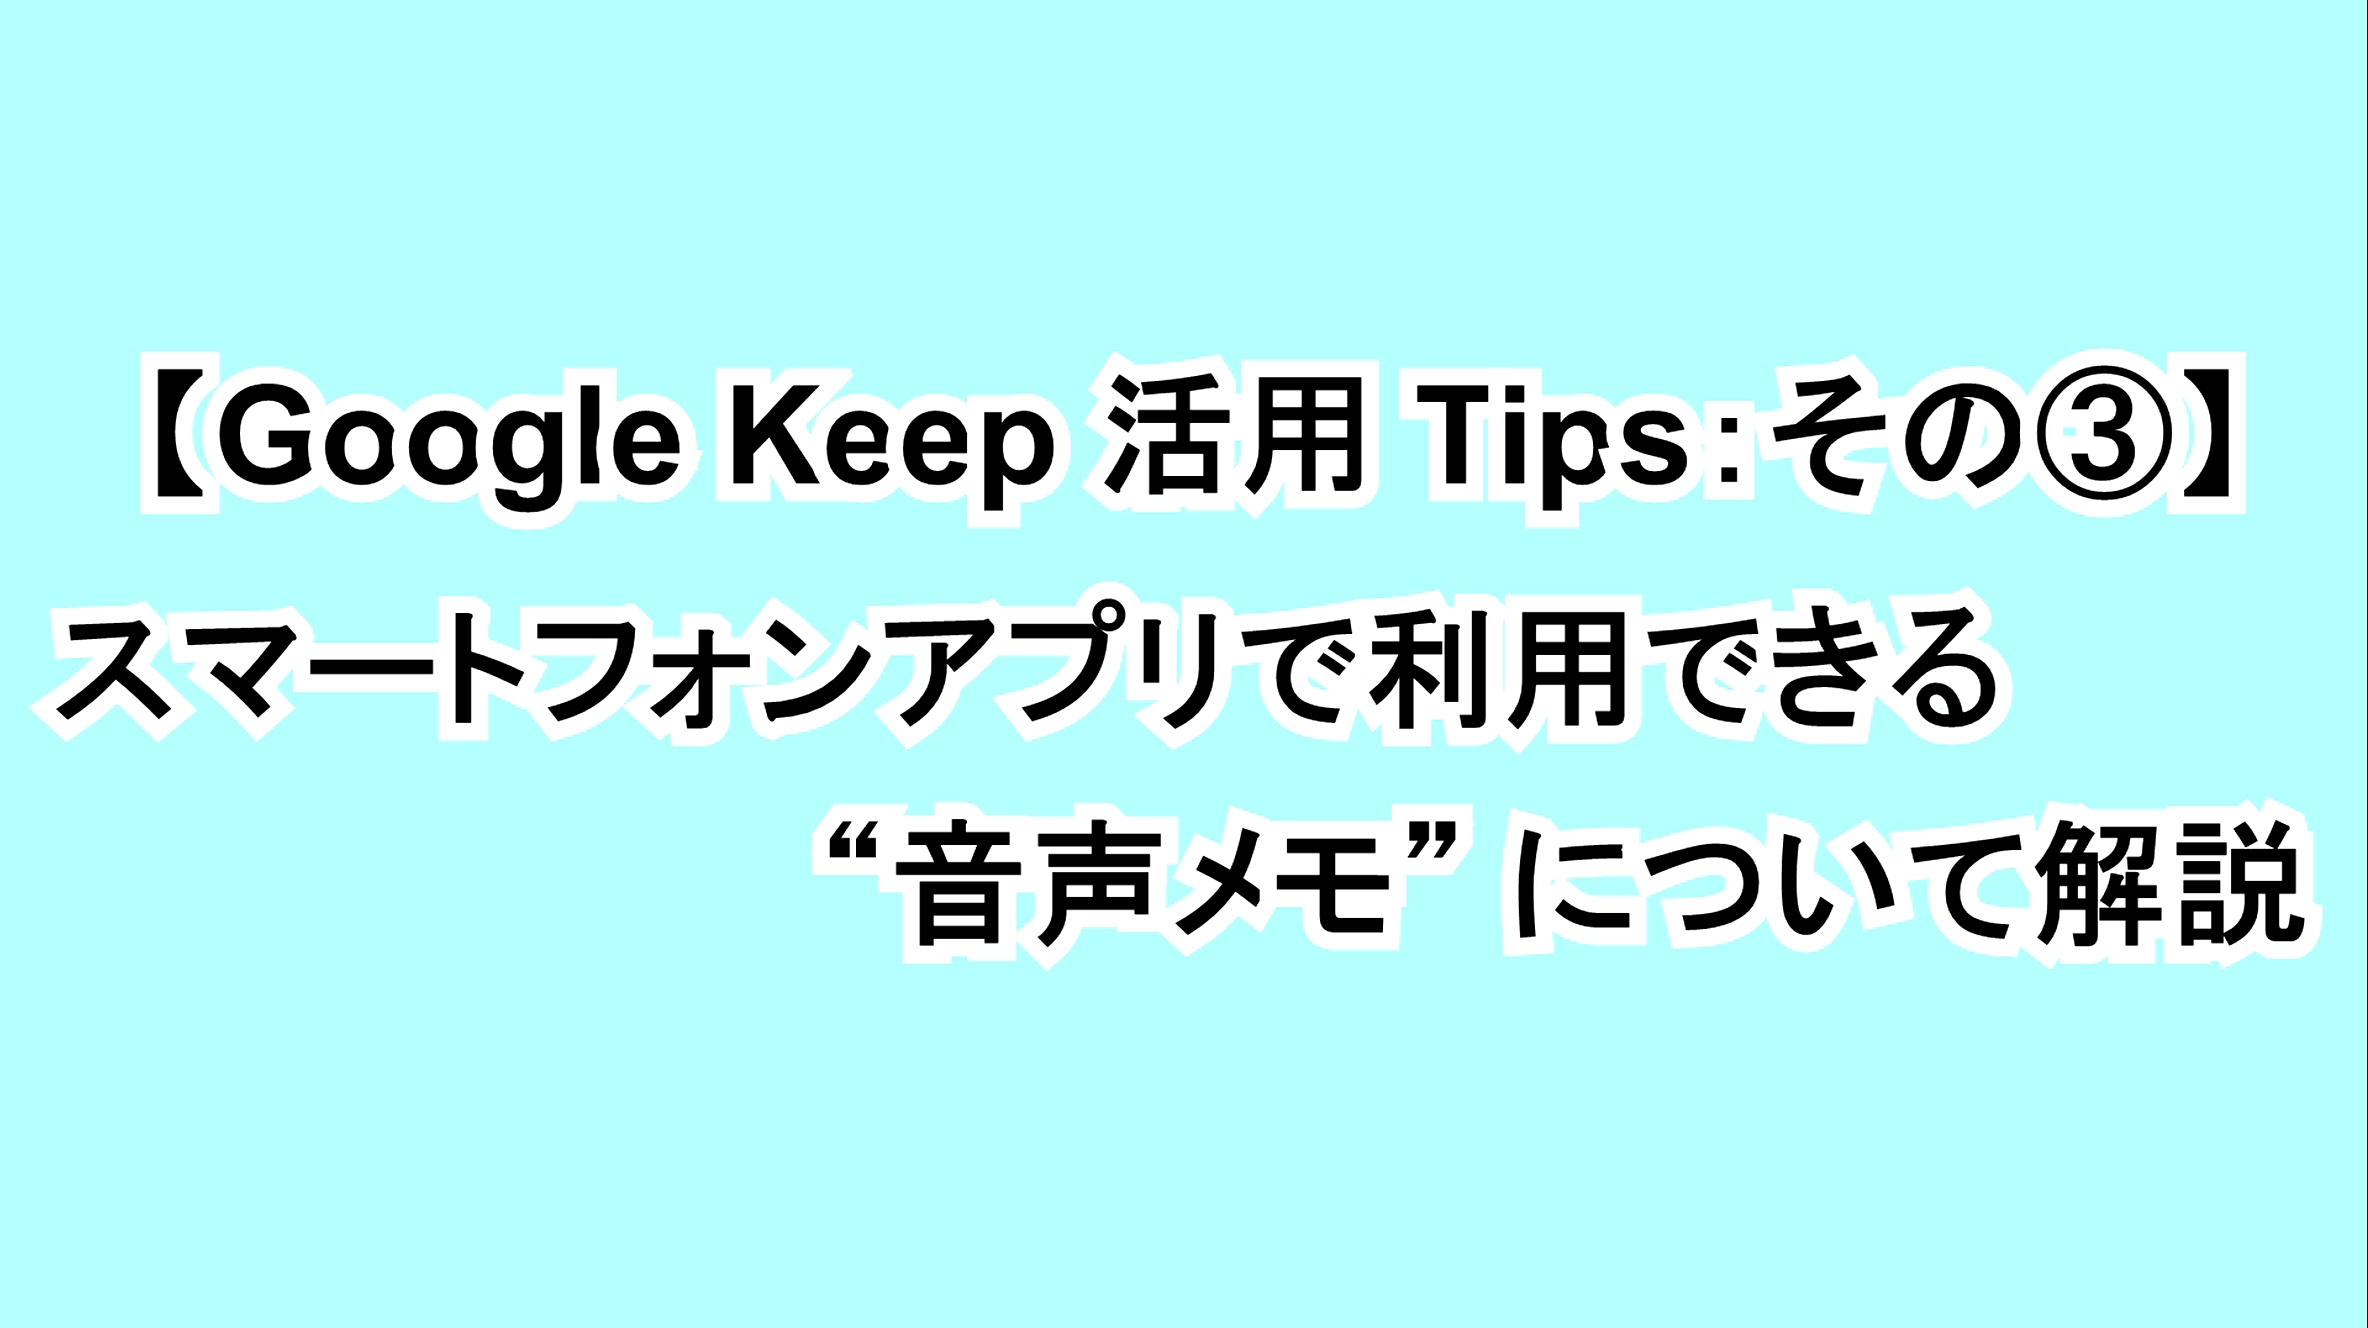 【Google Keep活用Tips：その③】スマートフォンアプリで利用できる “音声メモ” について解説